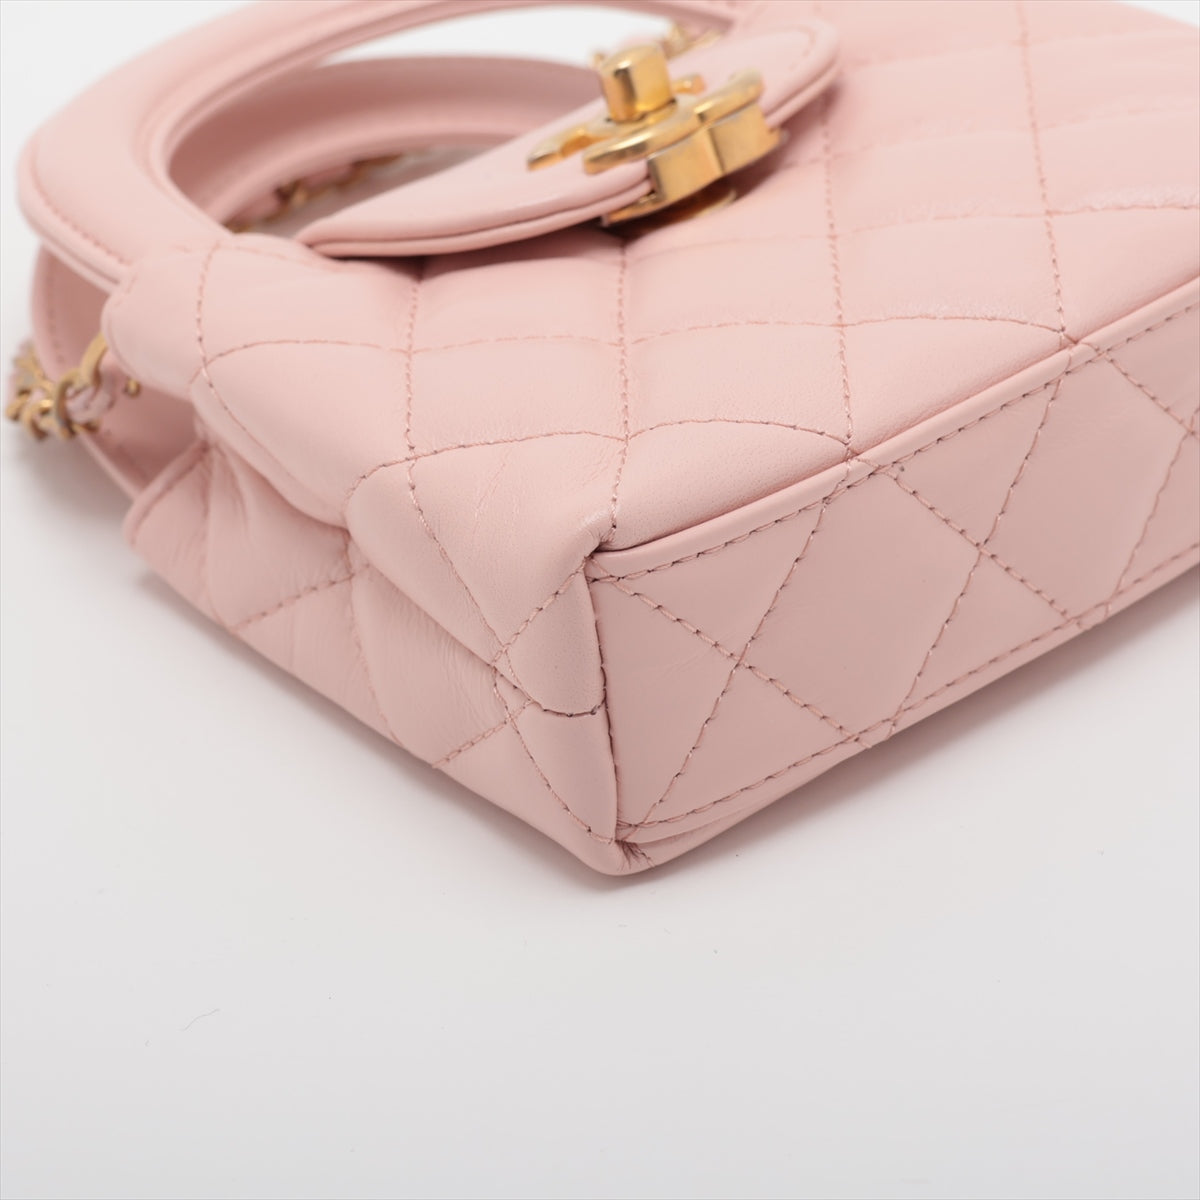 Chanel Matelasse Lambskin Chain shoulder bag Pink Gold Metal fittings AP3435